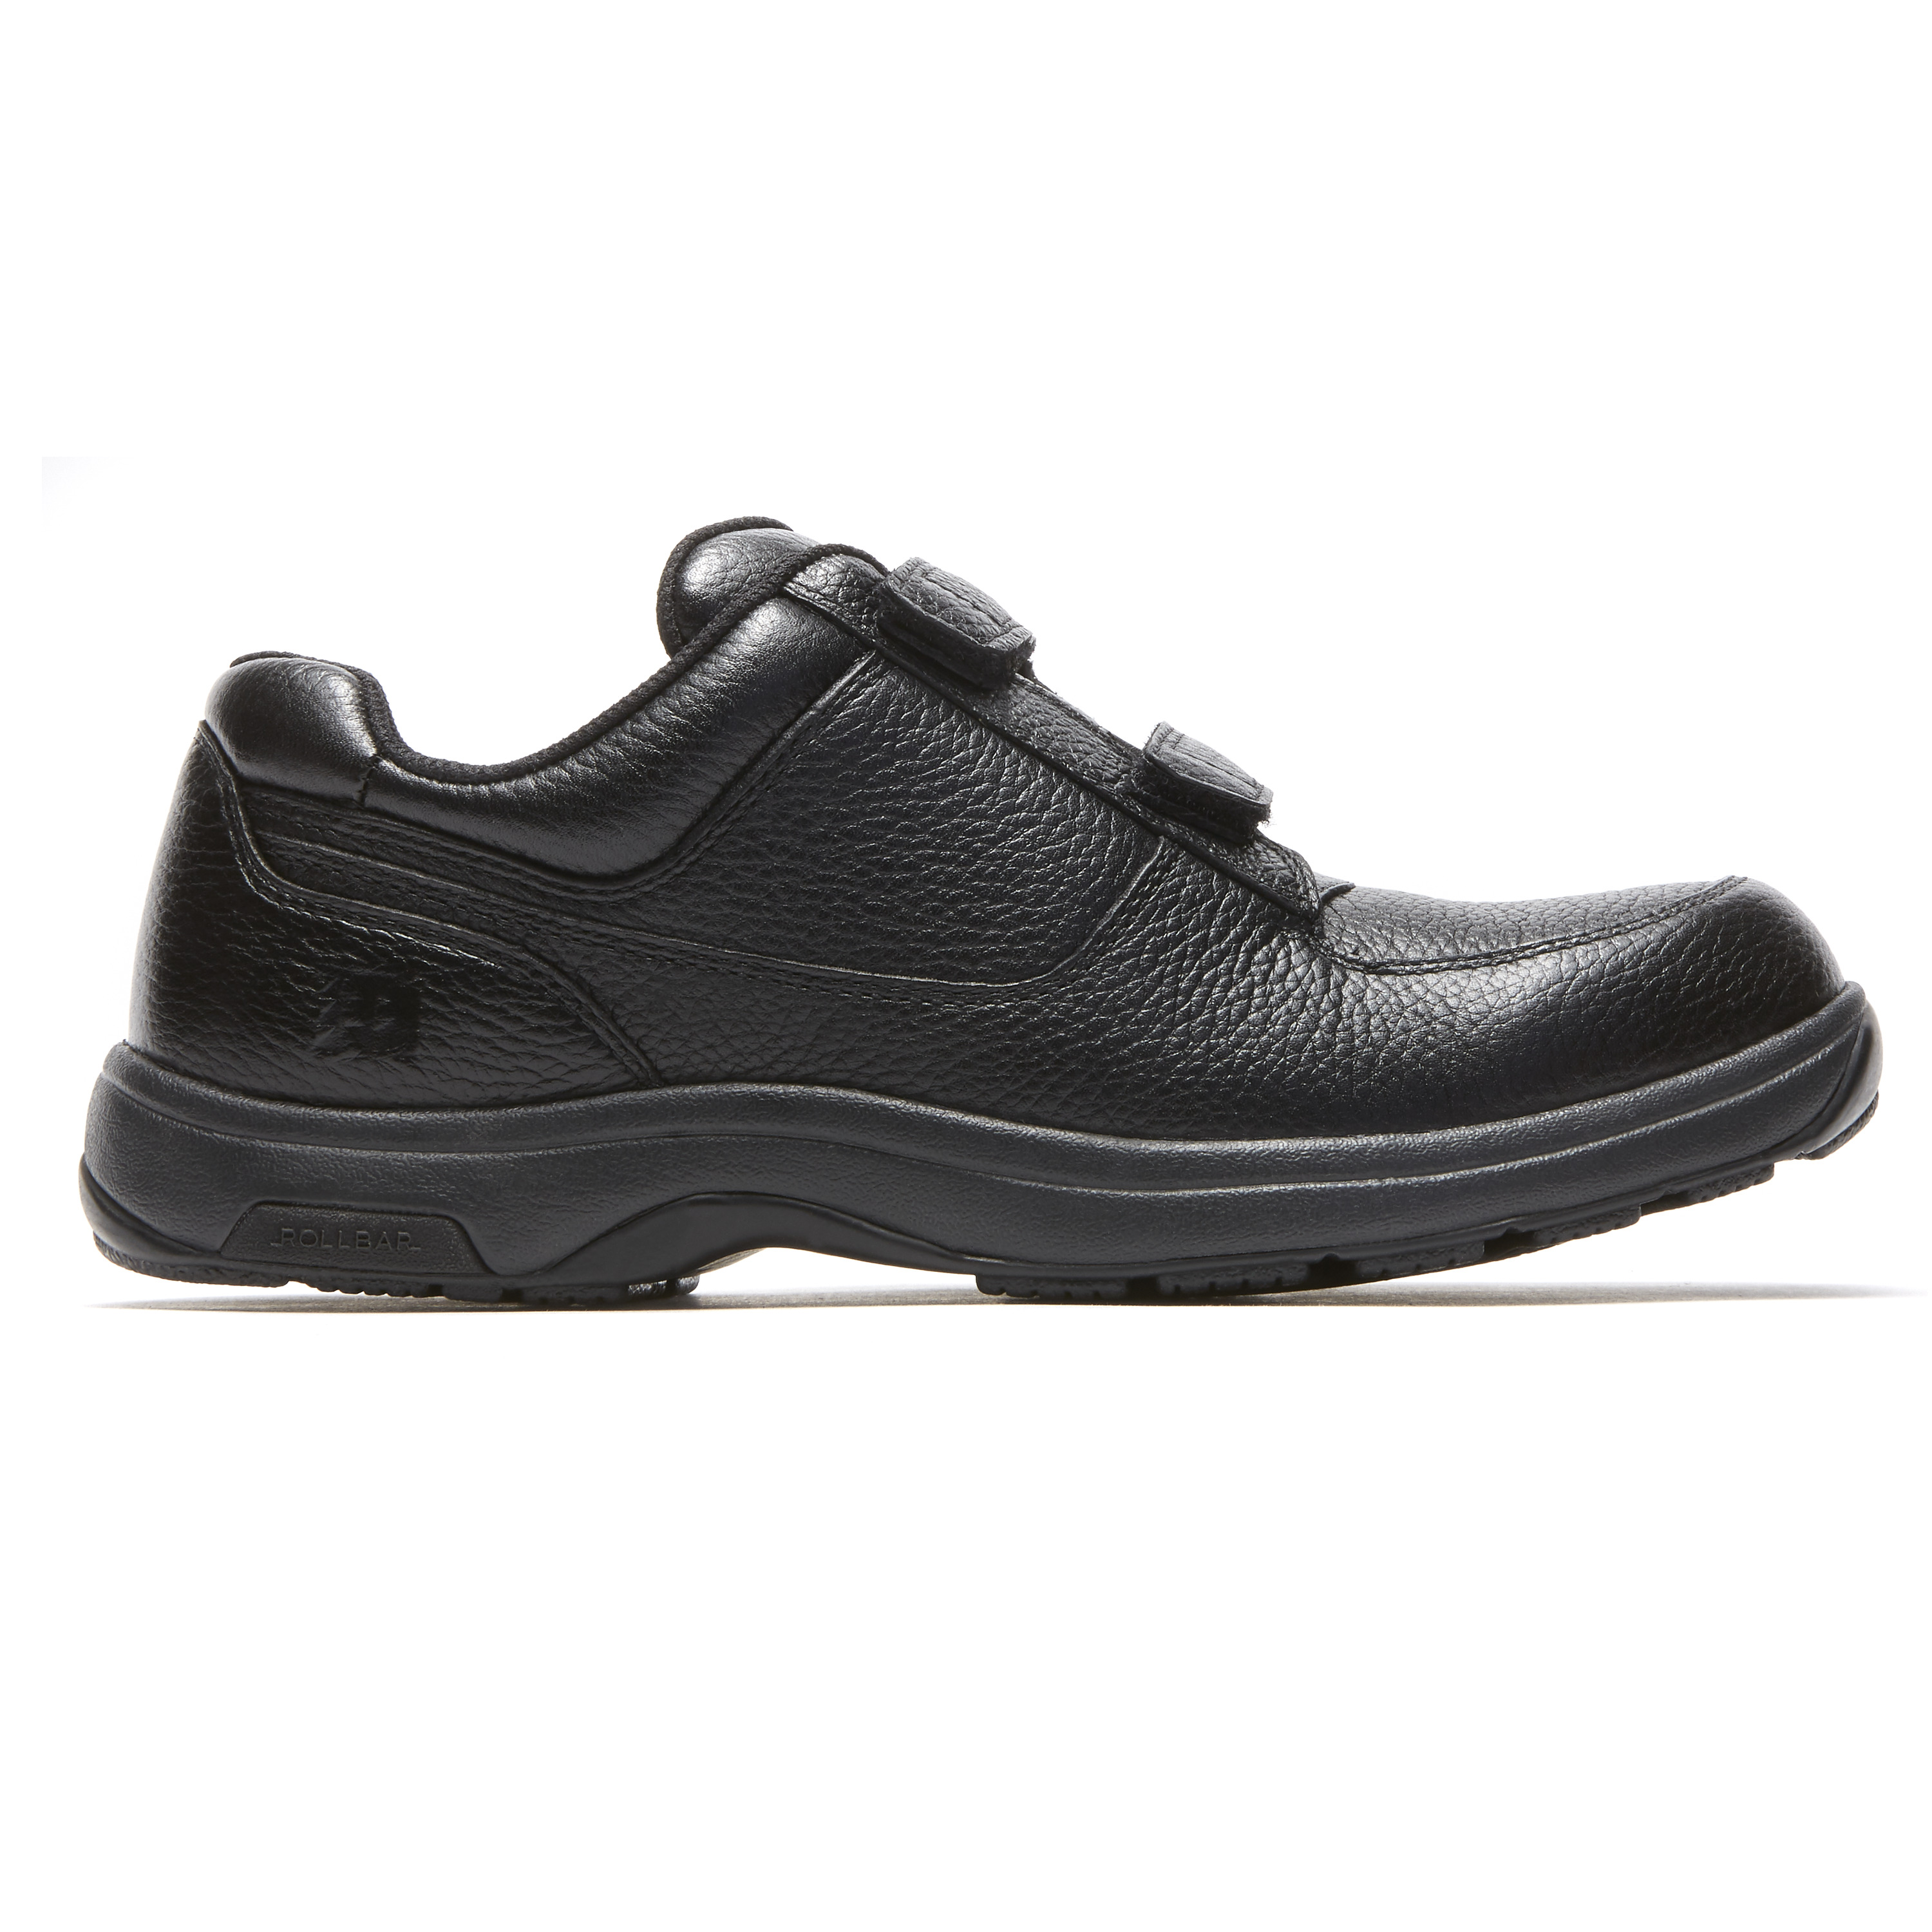 Dunham Men's Winslow Casual Shoe Style 8009BK | eBay